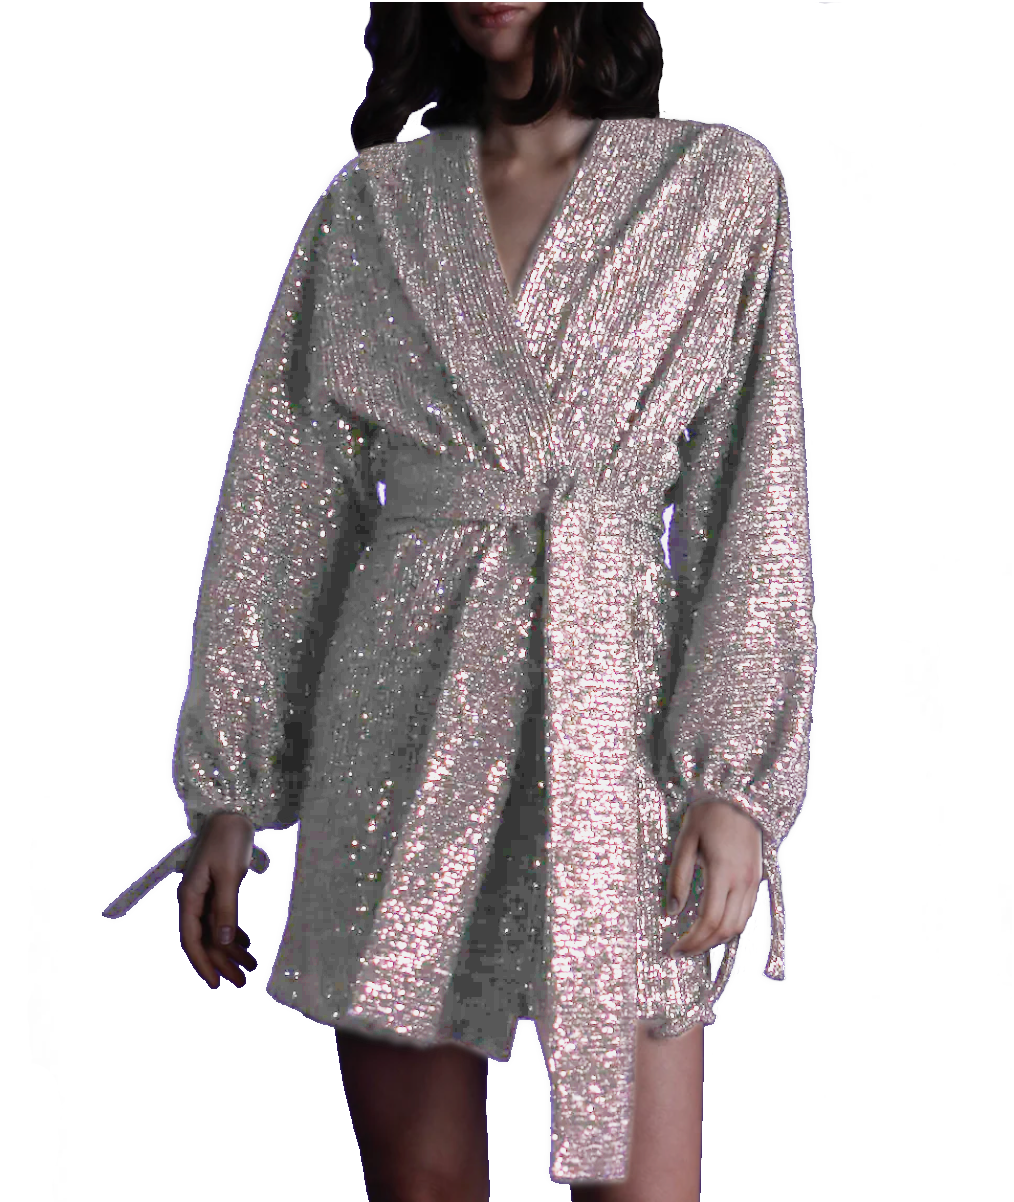 ELVIRA - short sequin dress in silver